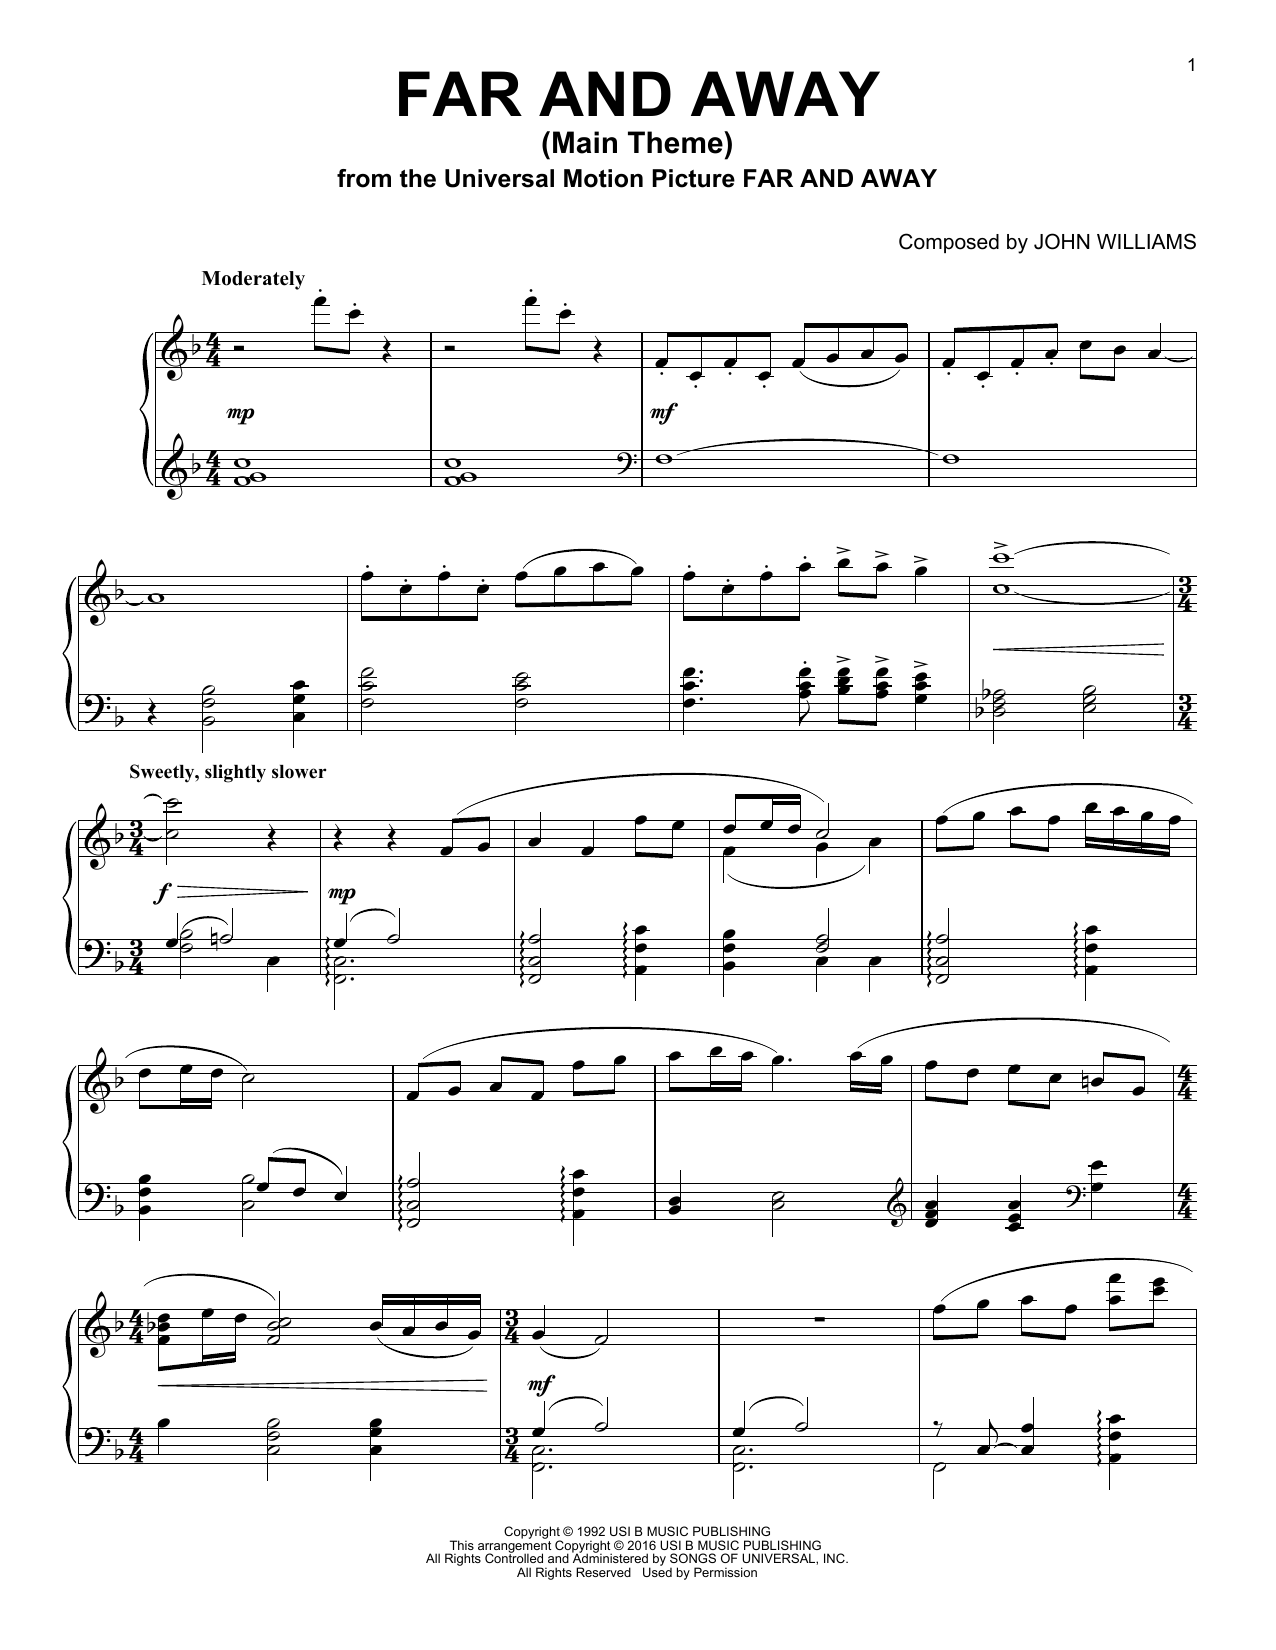 John Williams Far And Away (Main Theme) Sheet Music Notes & Chords for Melody Line, Lyrics & Chords - Download or Print PDF